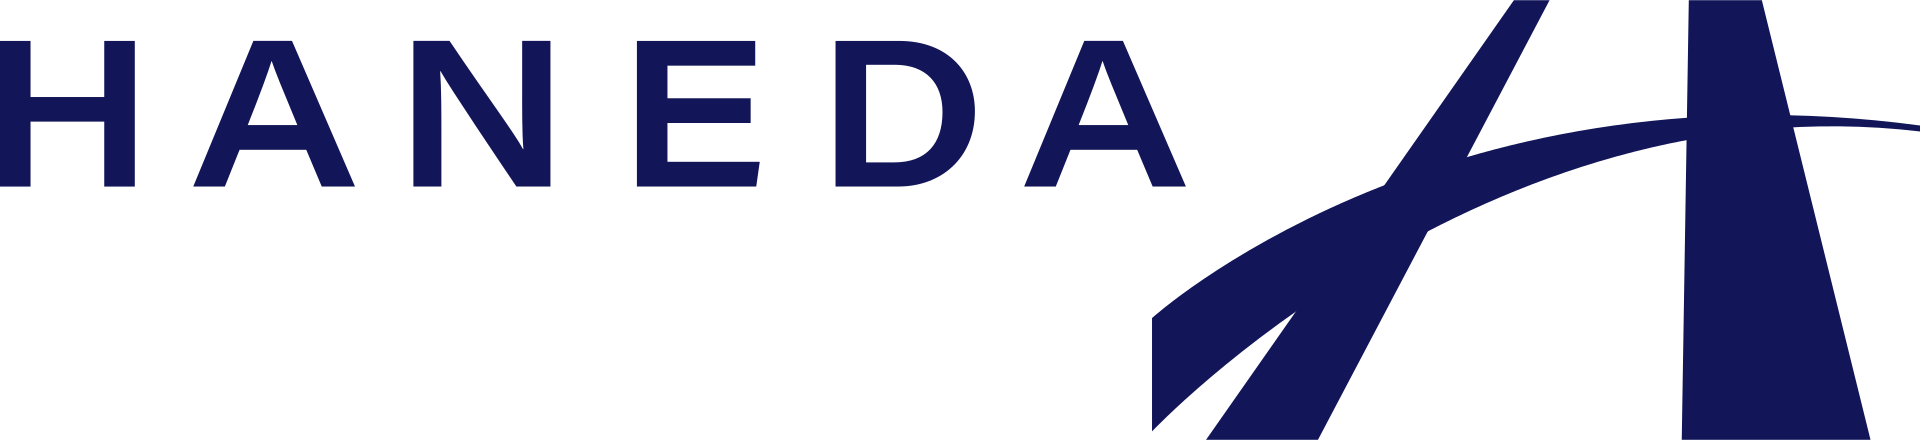 Haneda International Airport Brand Logo